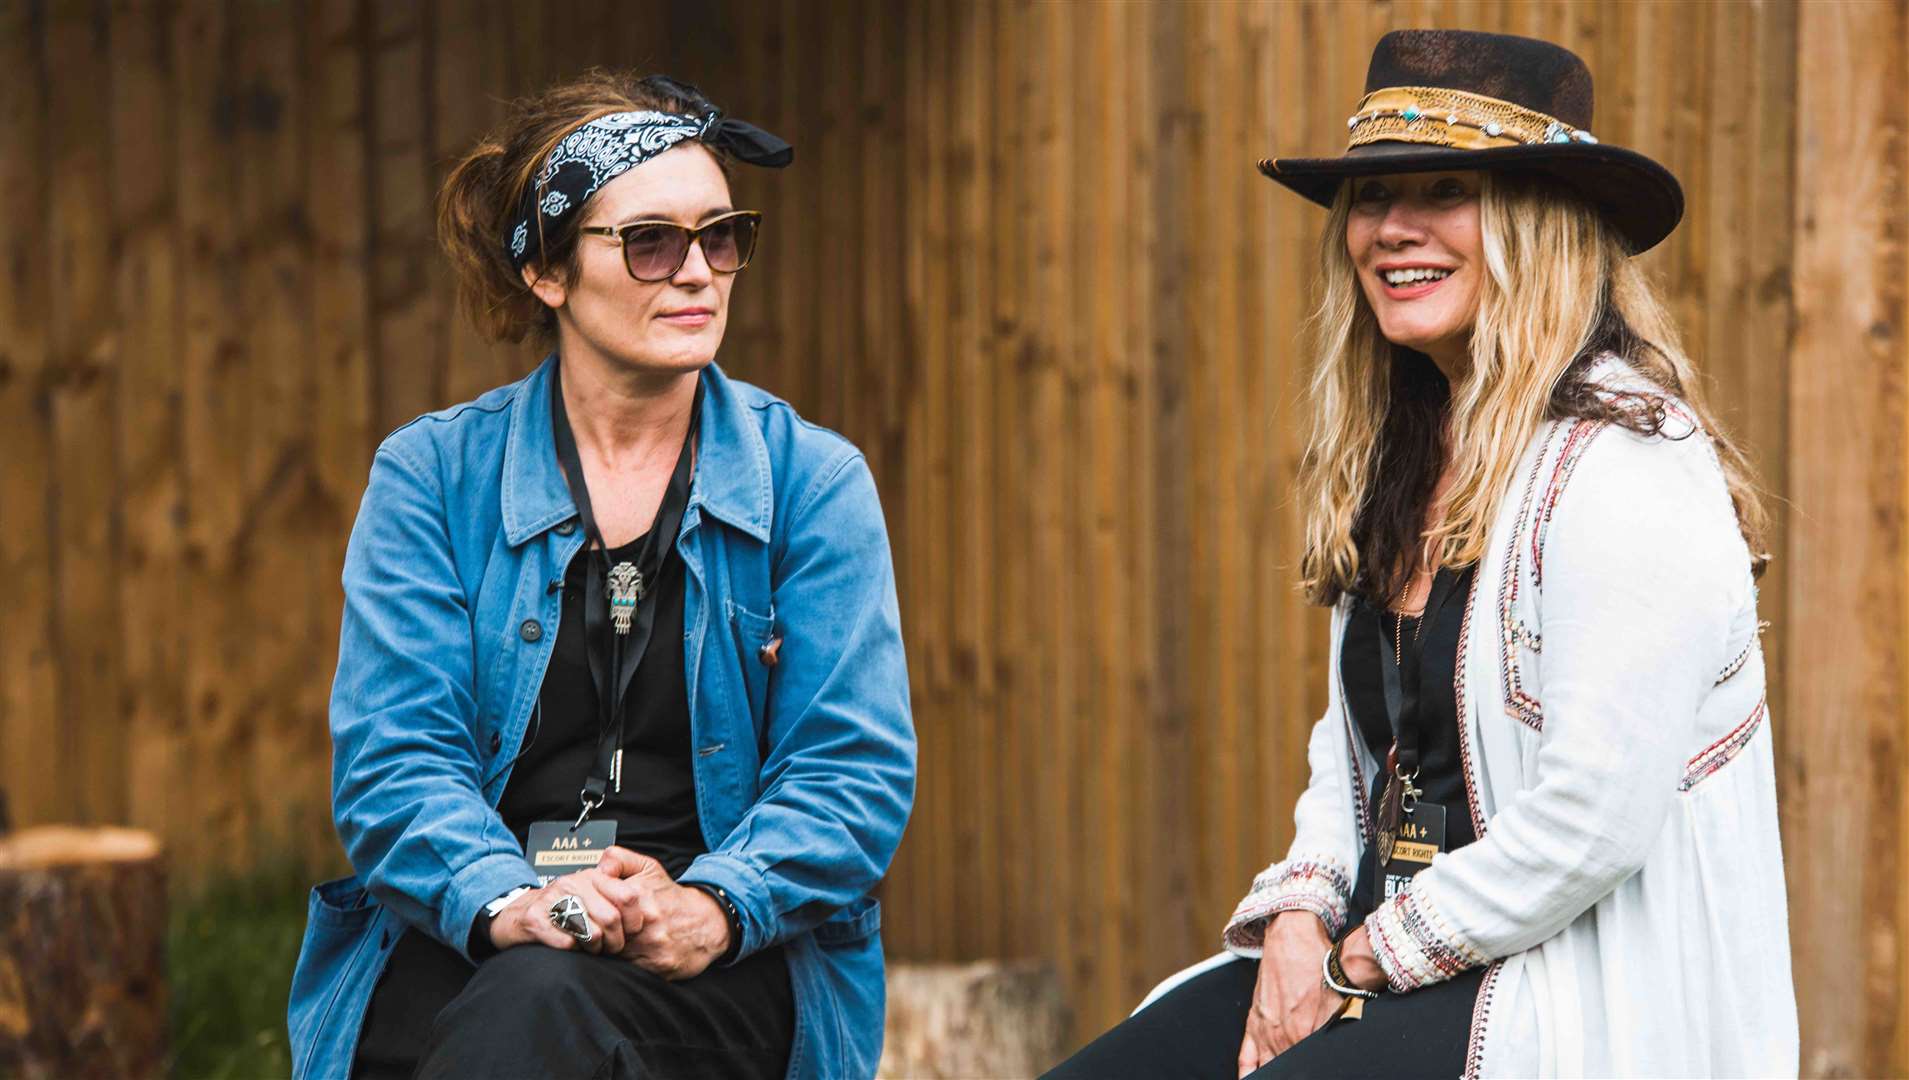 Deborah Shilling and Gill Tee, founds of Black Deer Festival